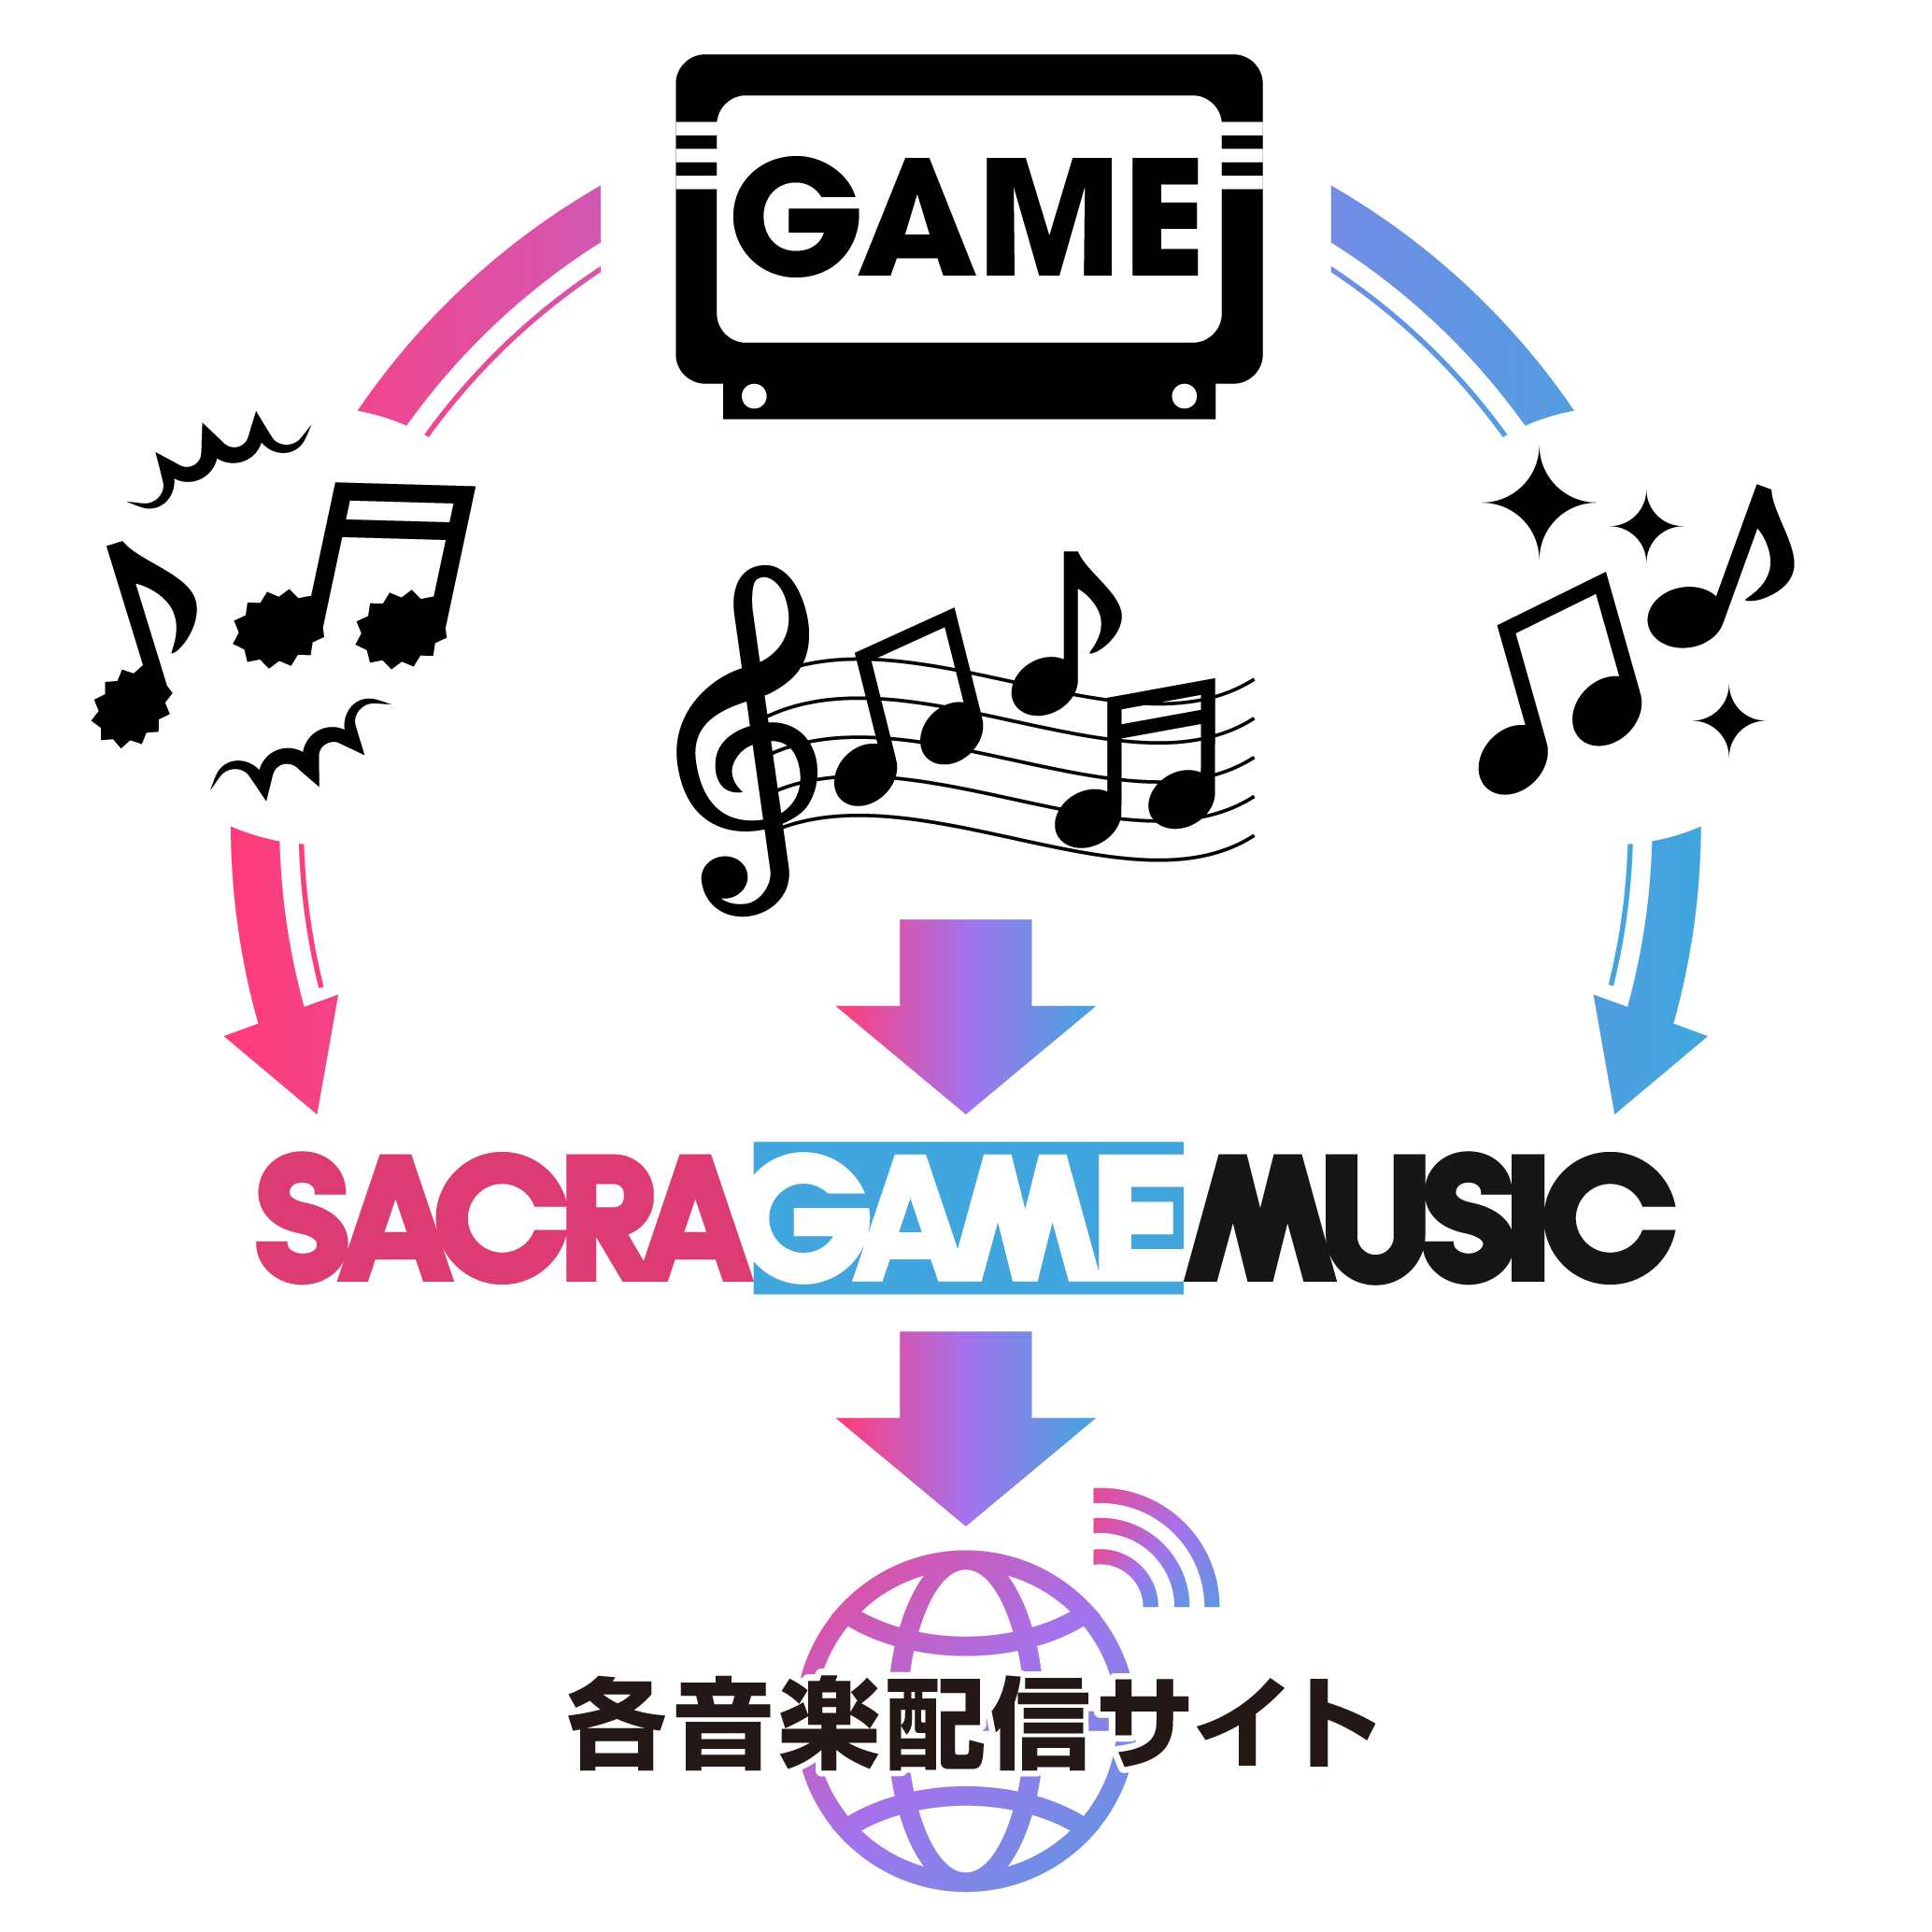 SACRA GAME MUSIC